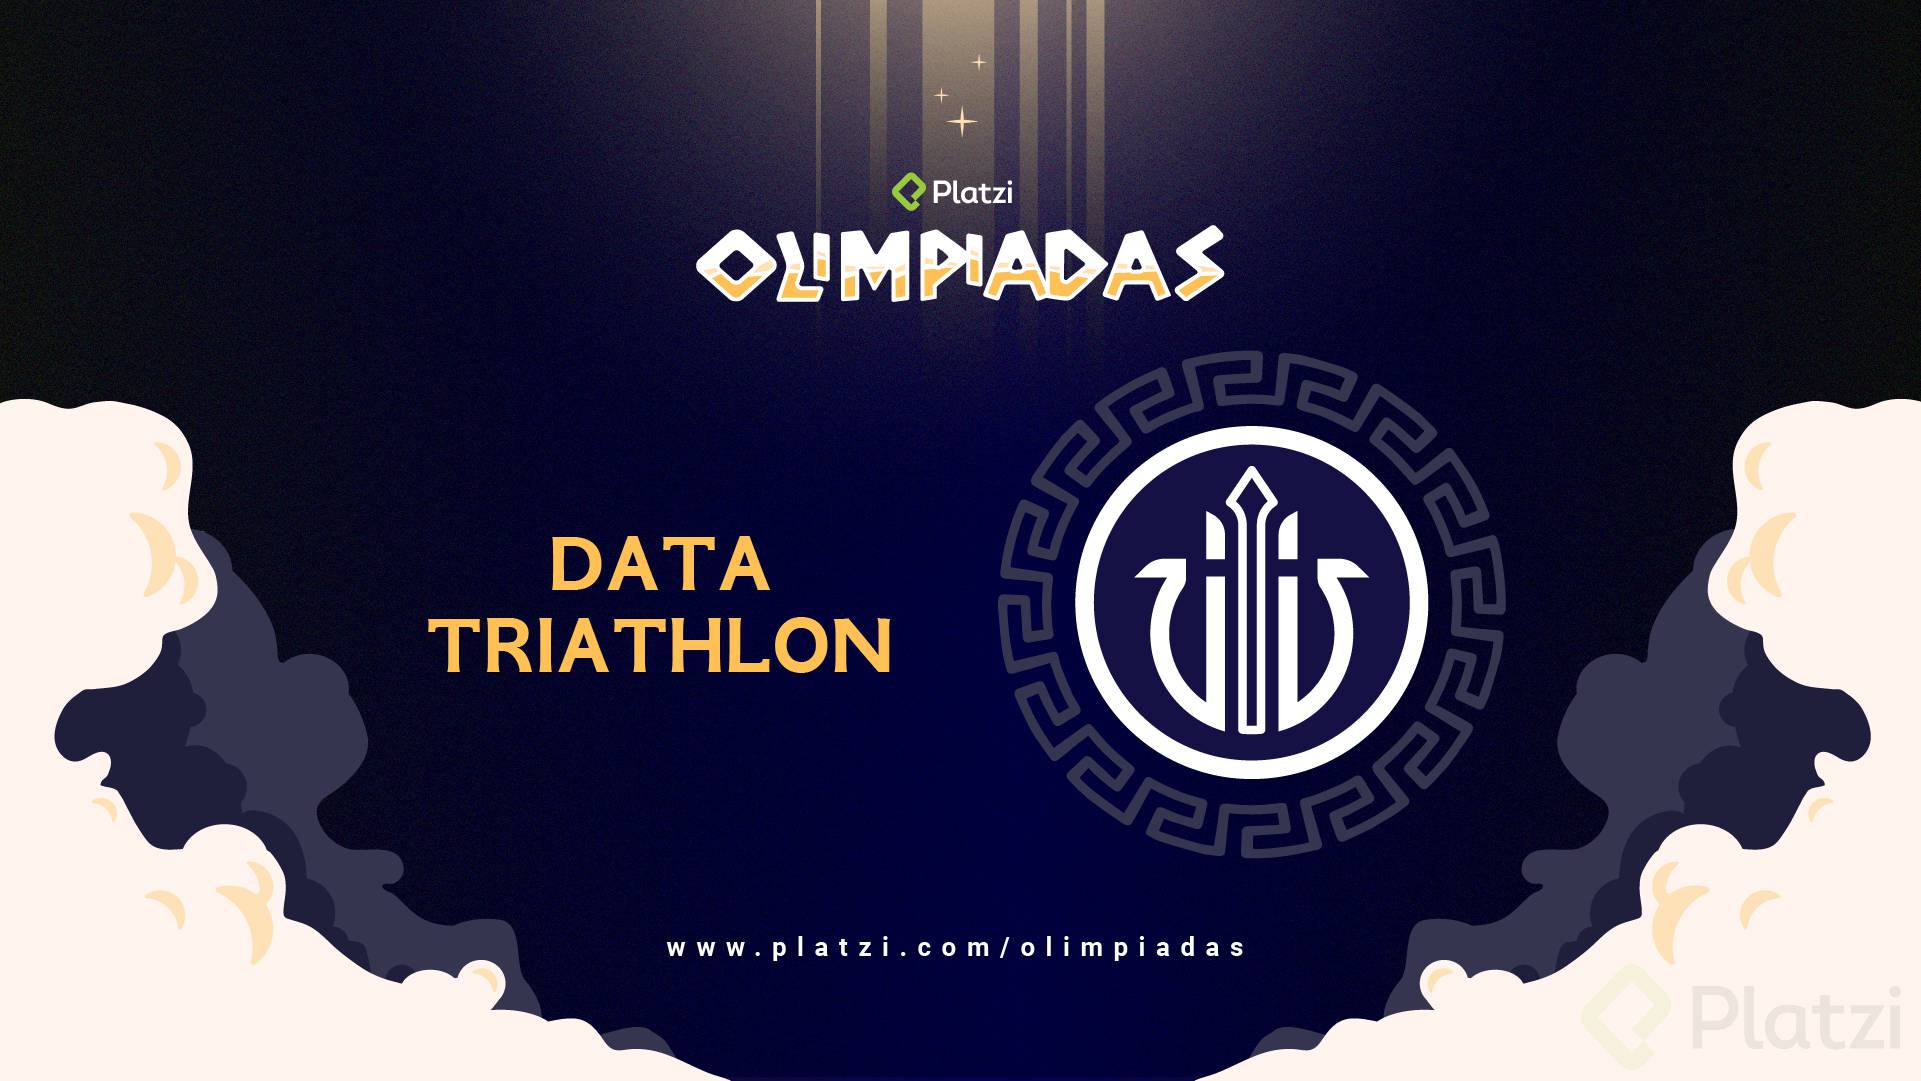 Olimpiadas_Data_Triathlon_Wallpaper.png